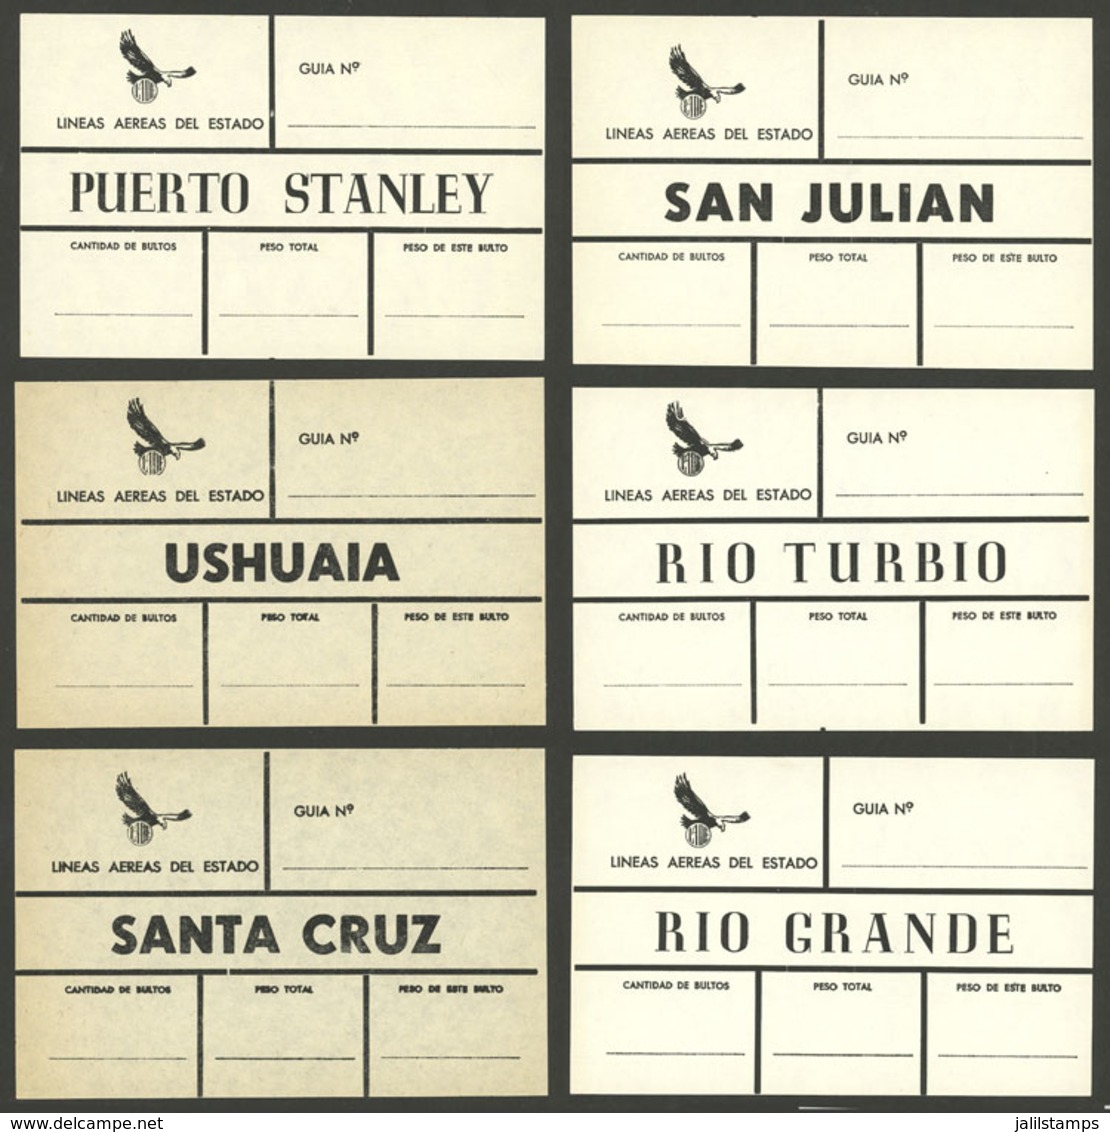 ARGENTINA: 31 Mail Report Forms (circa 1960) Of LADE Airline (Líneas Aéreas Del Estado) For Air Parcel Post To PUERTO ST - Airmail